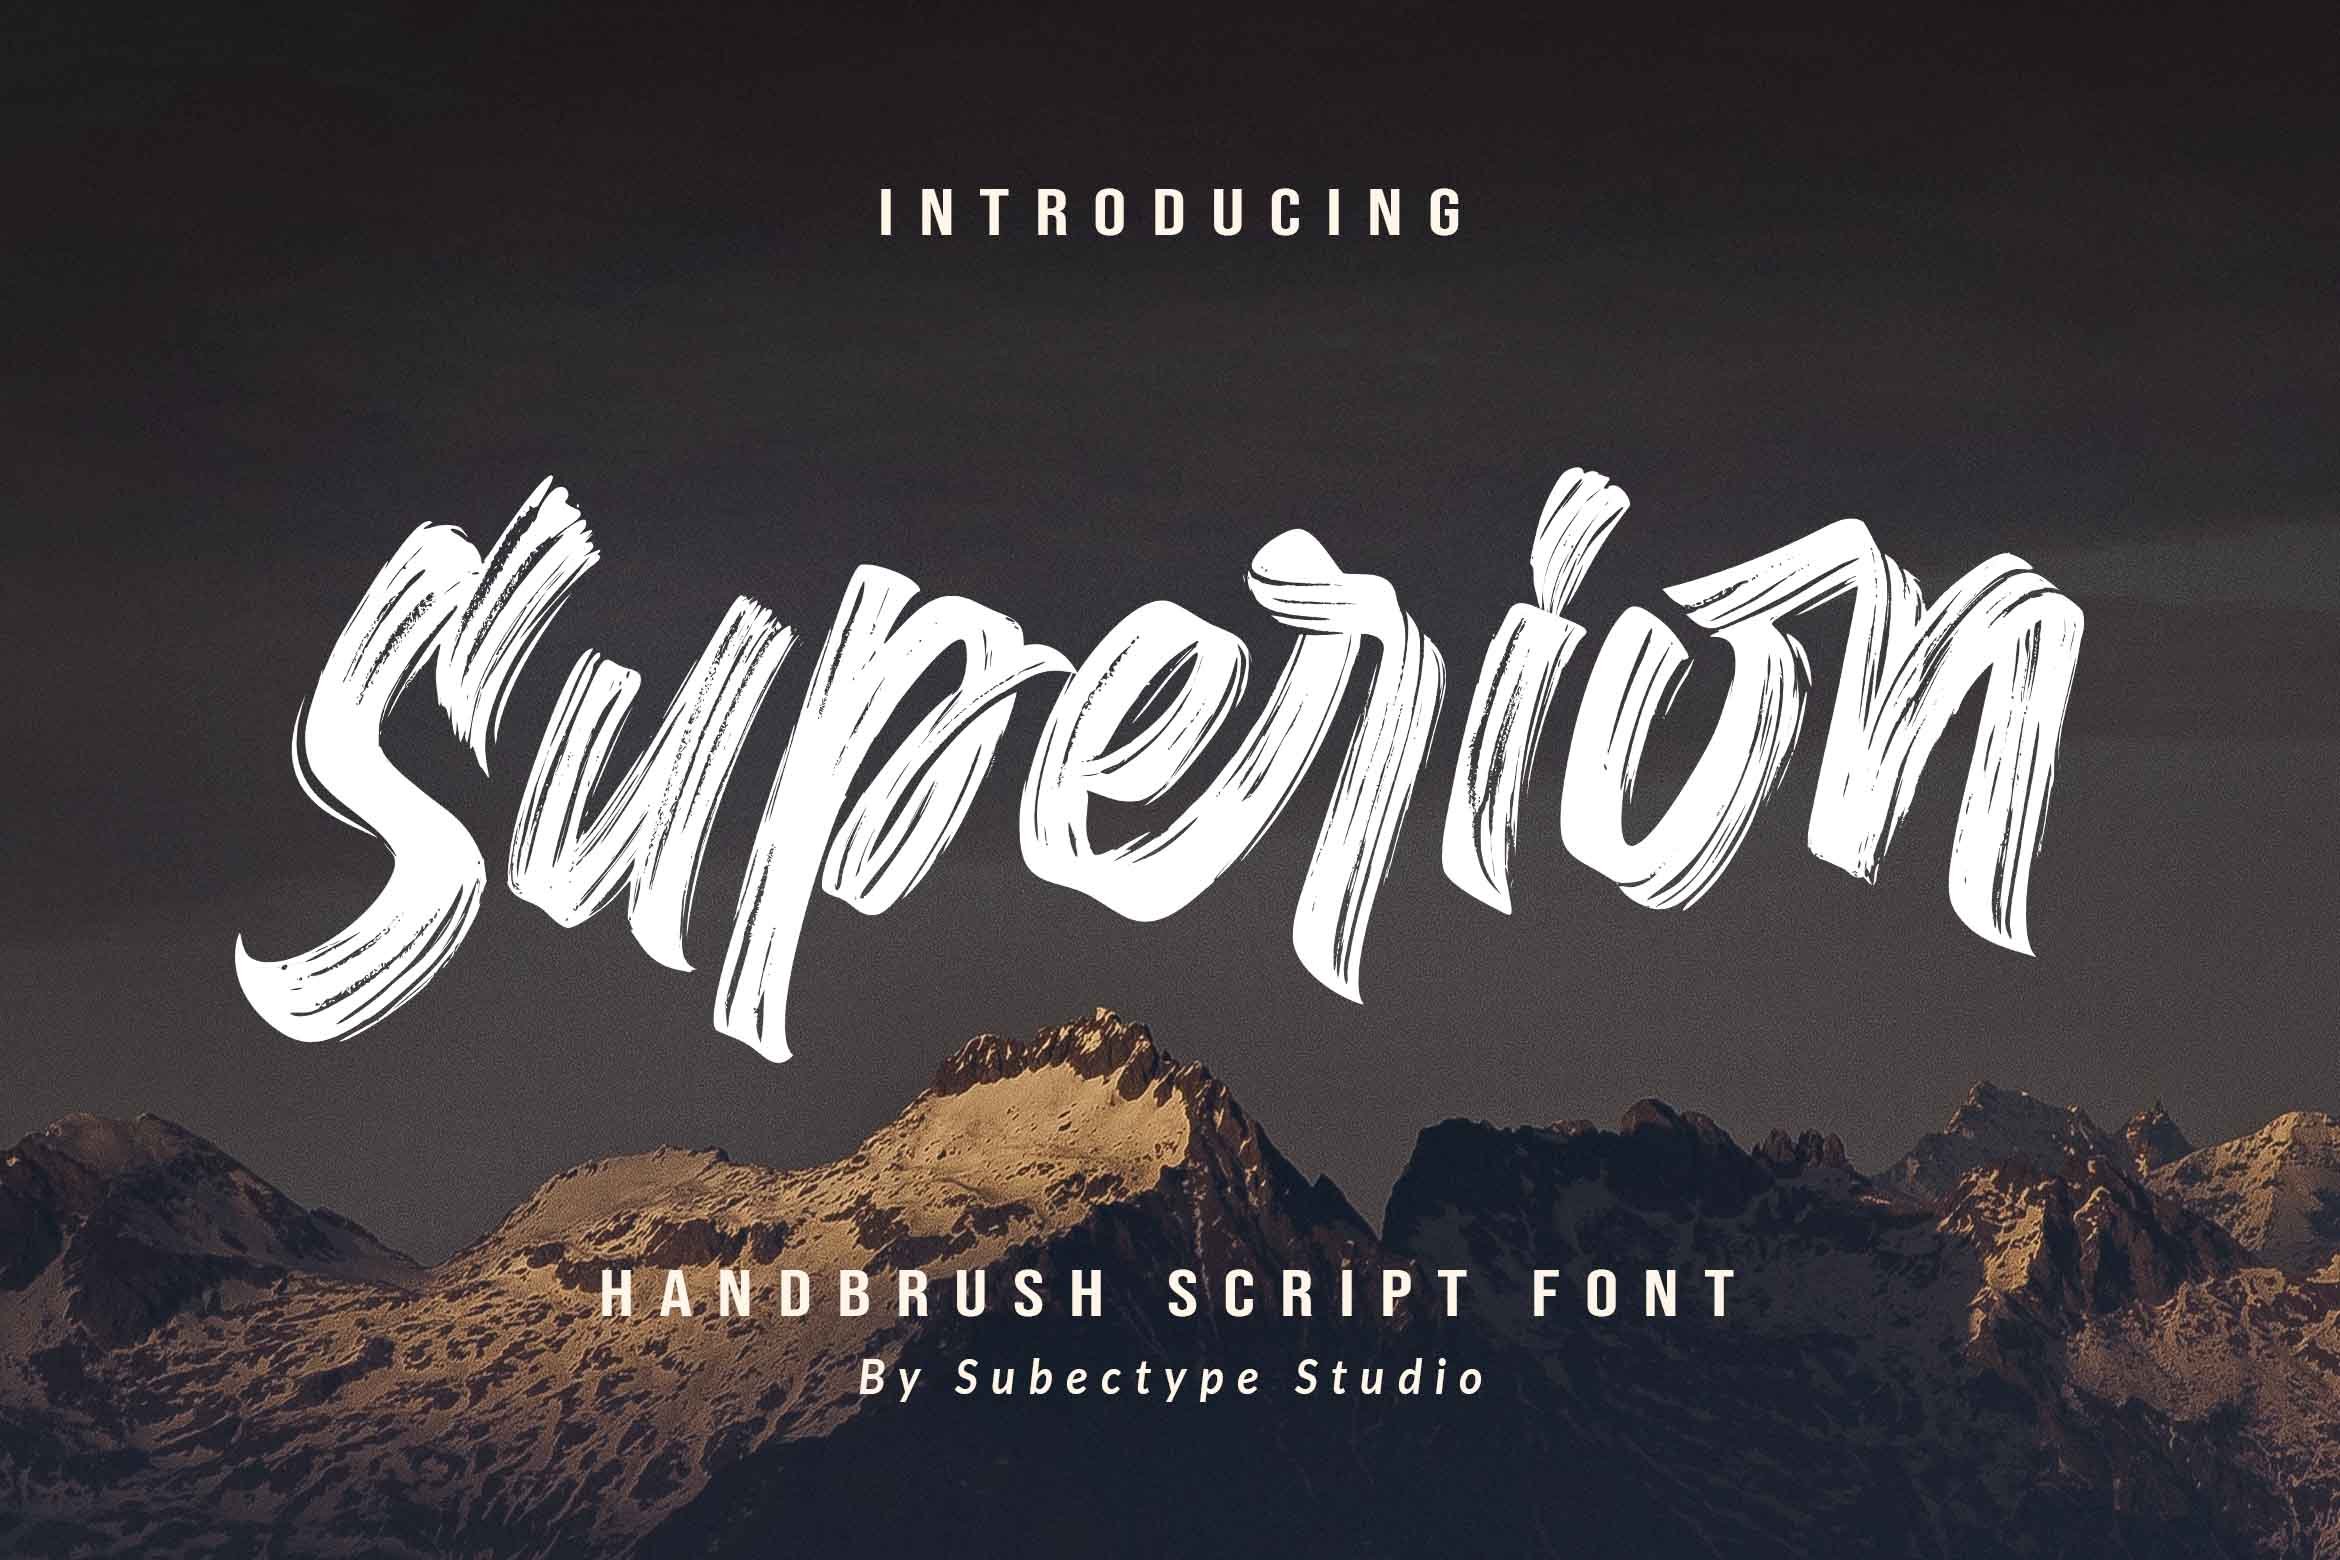 SALE! Superion / Brush Script cover image.